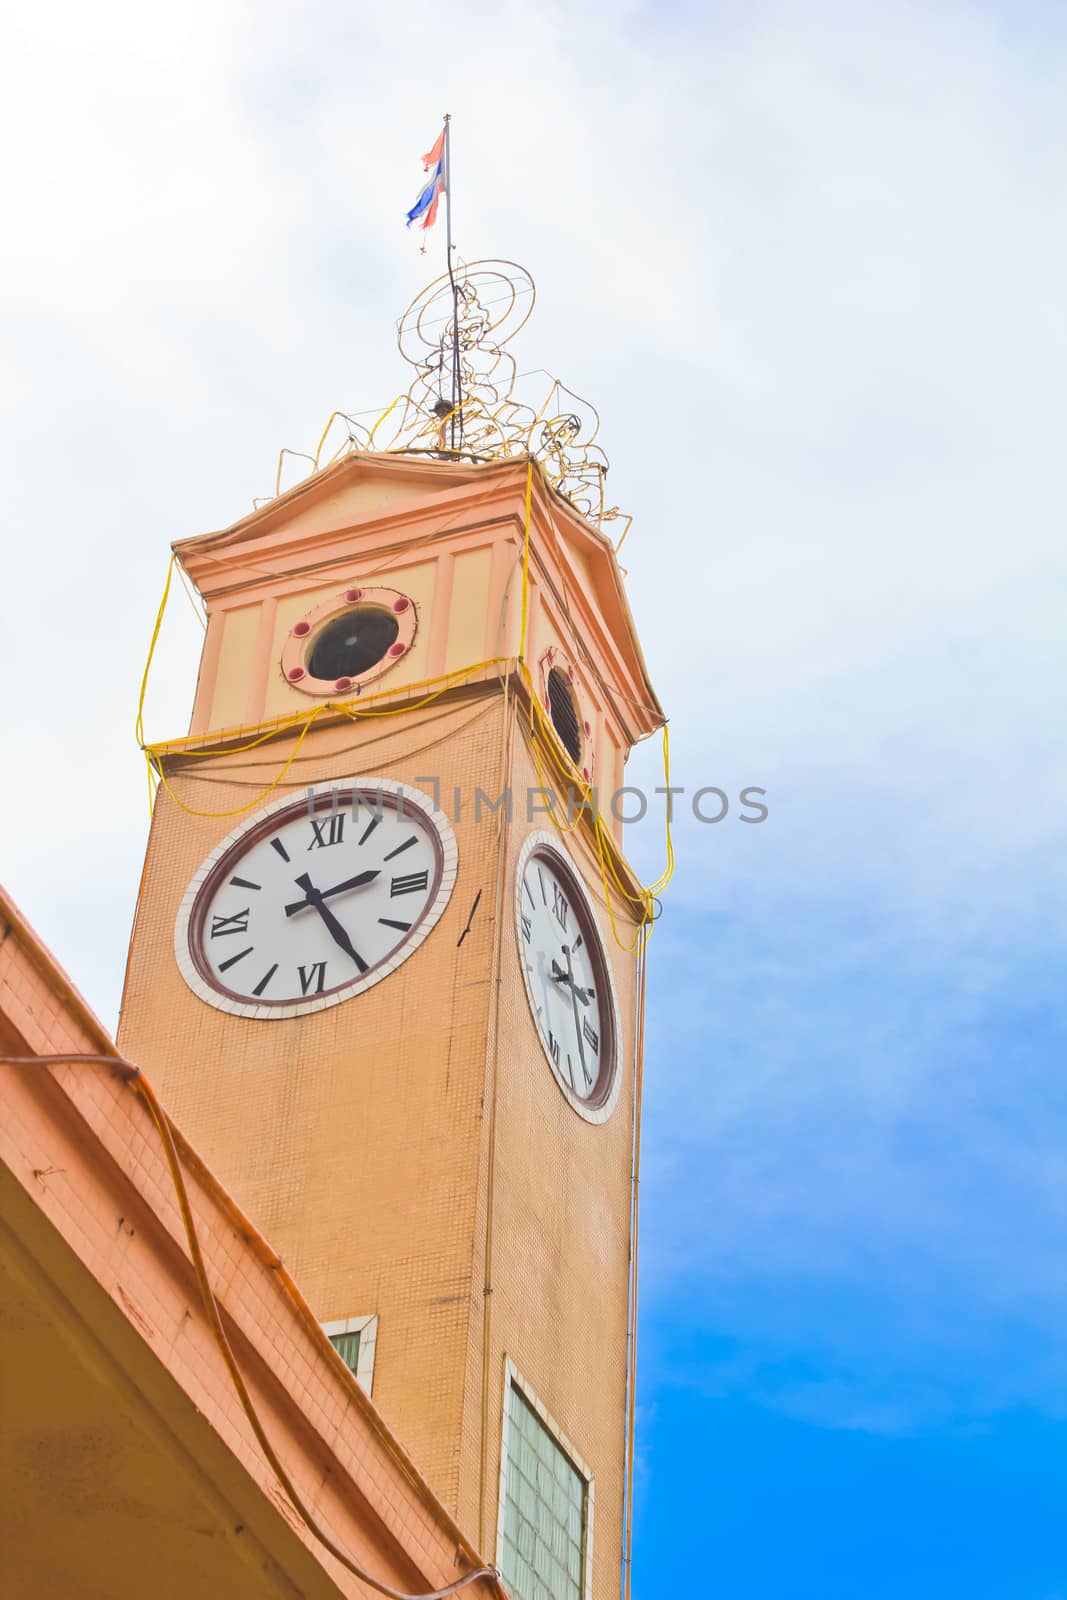 Memorial clock tower by coleorhiza